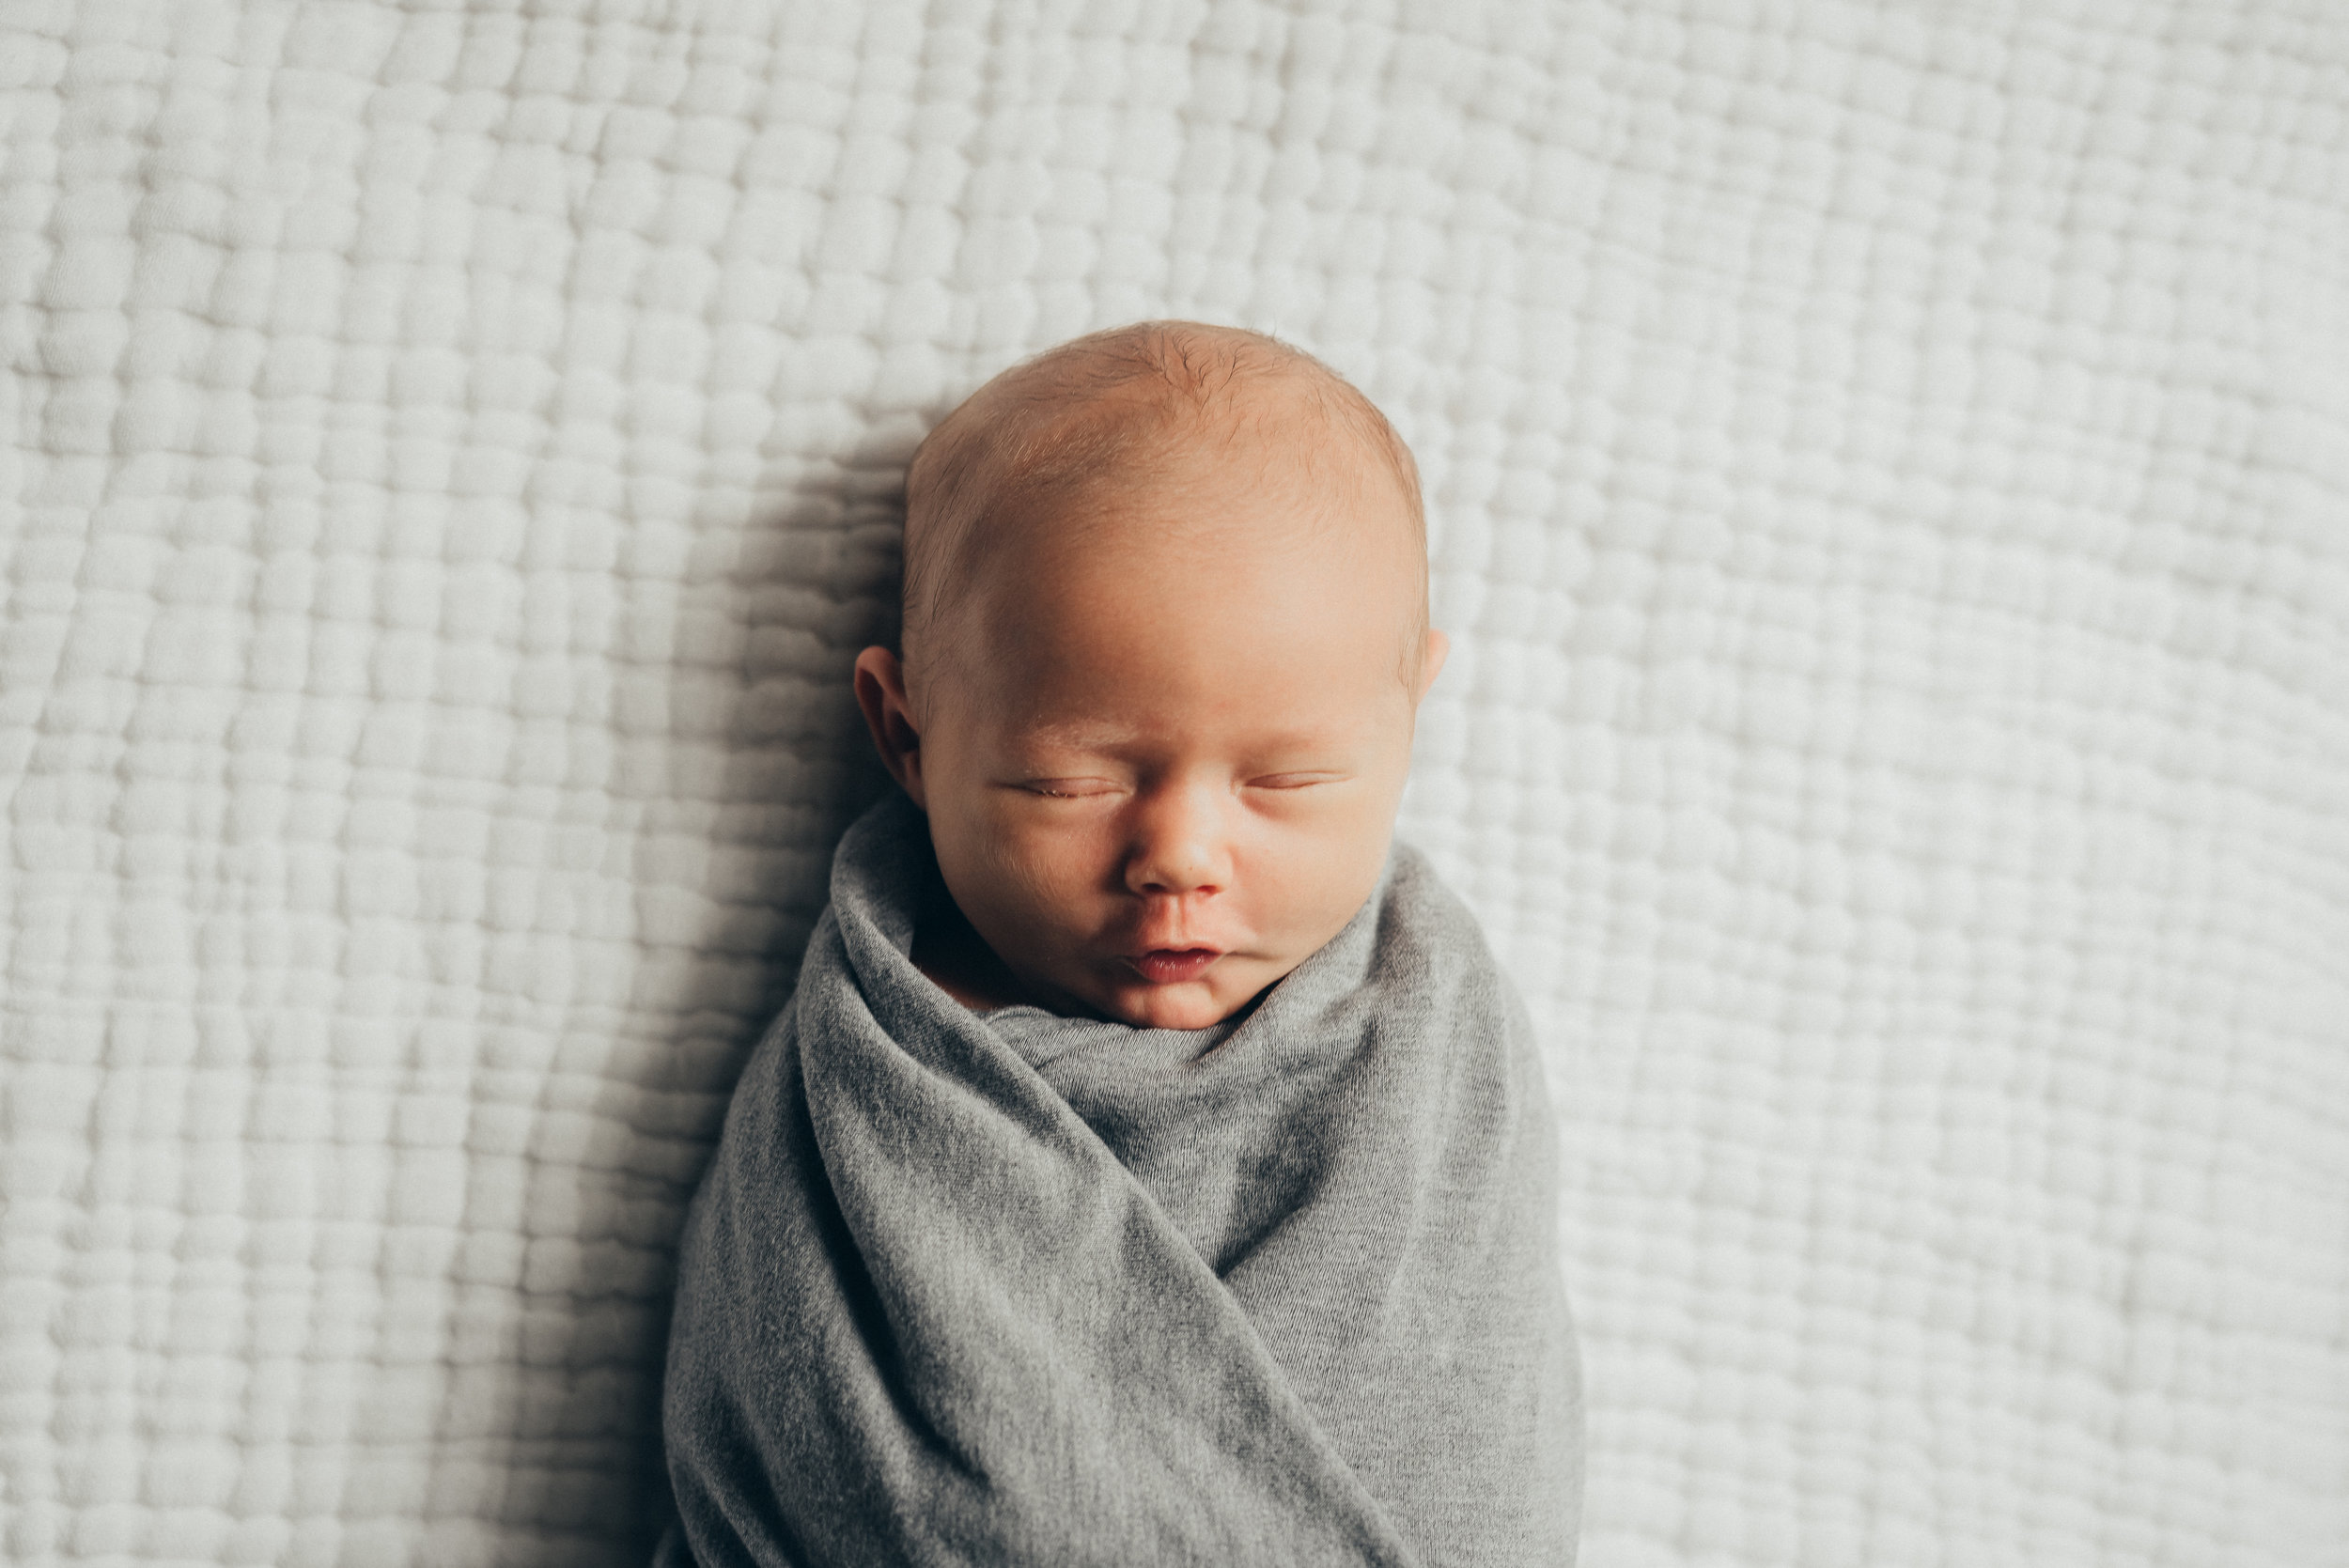 Natural-light-newborn-portrait-baby-boy5.jpg